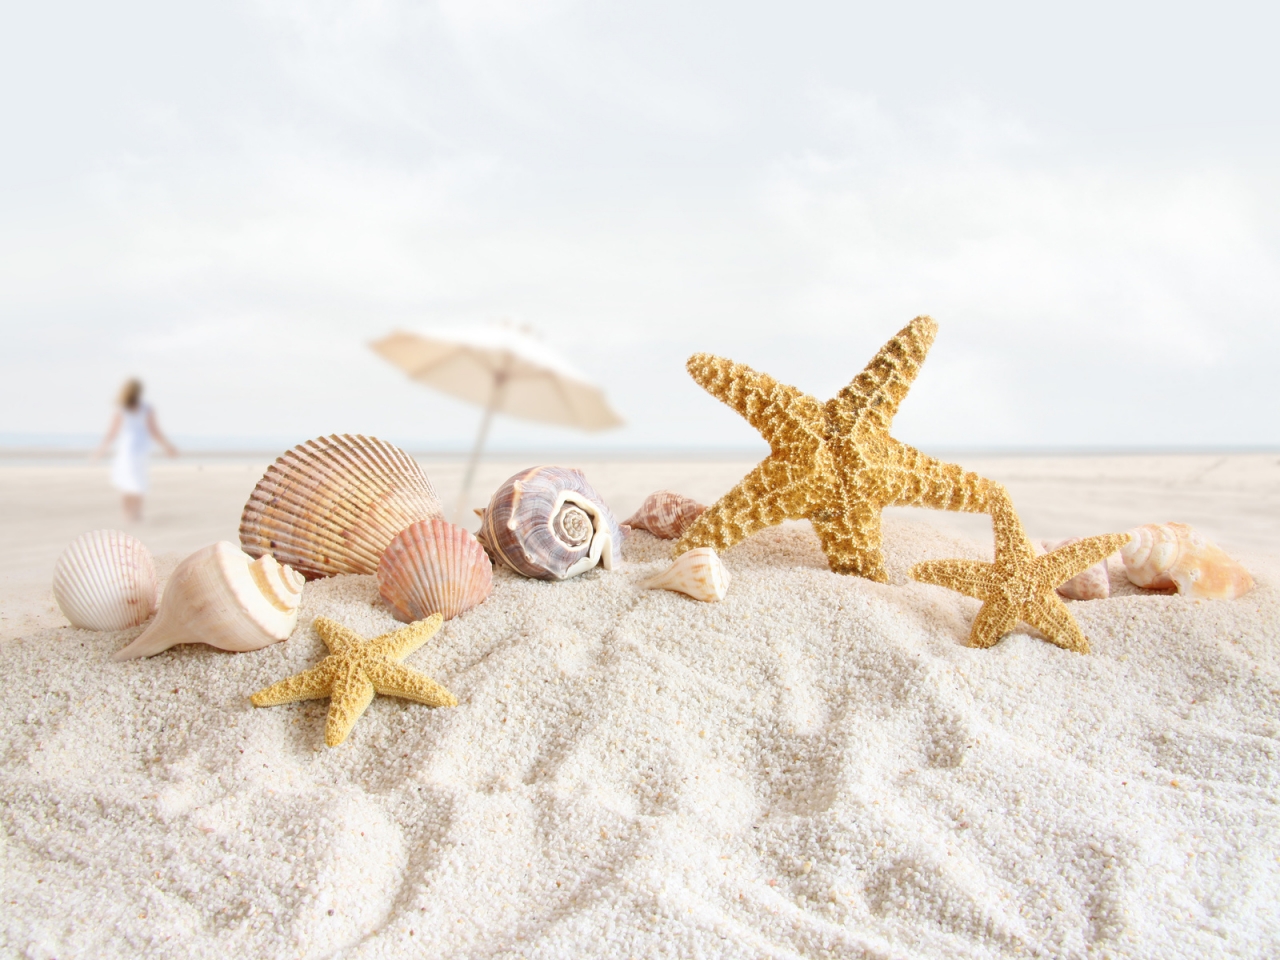 Seashells and Starfish for 1280 x 960 resolution